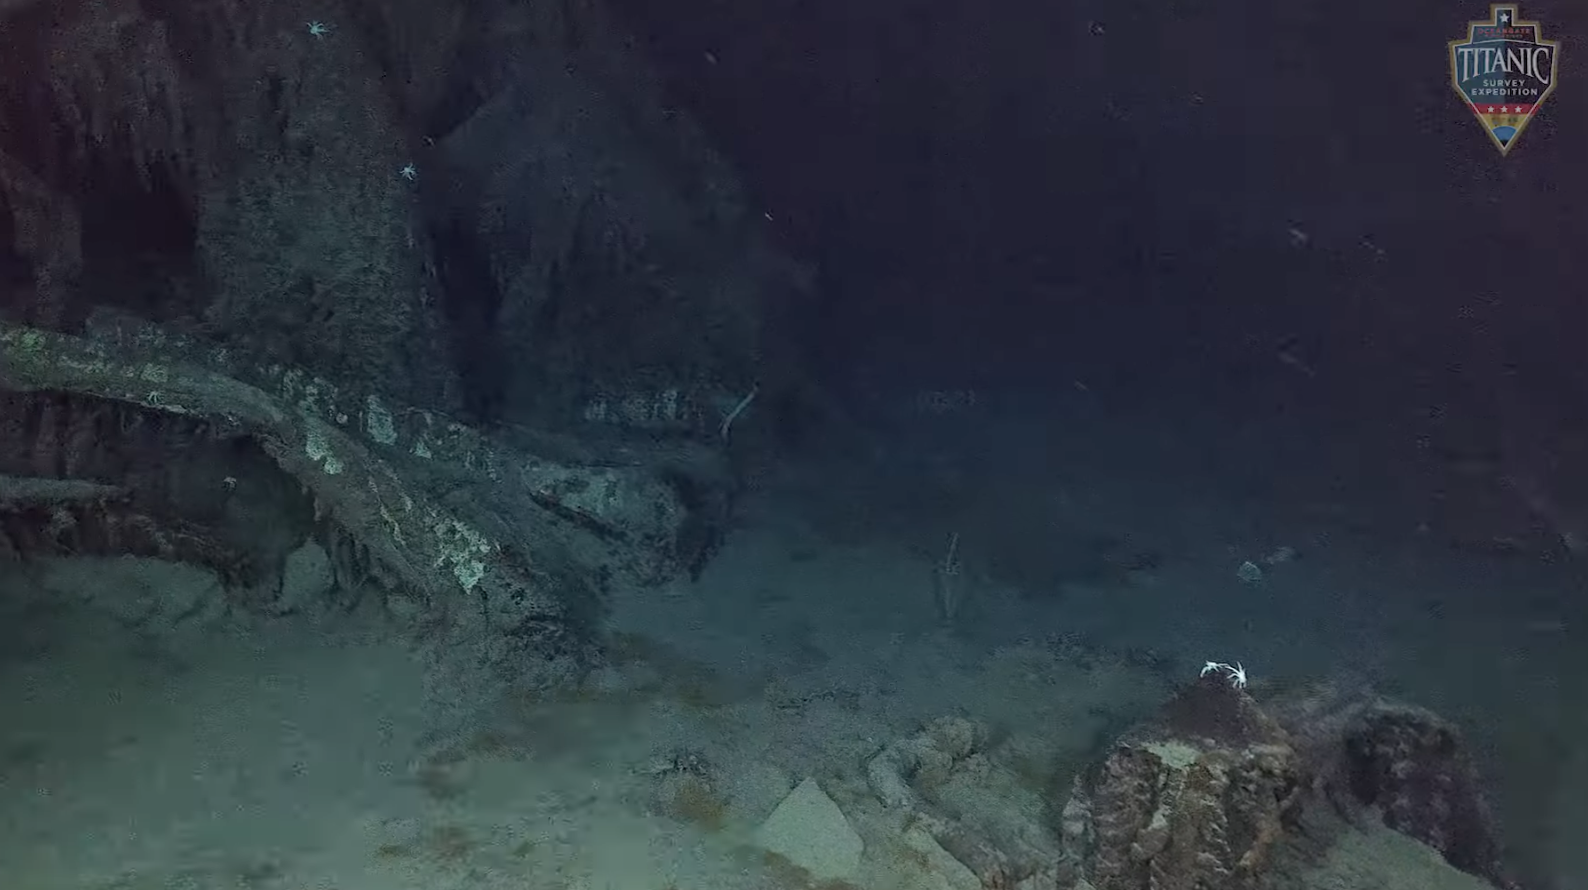 Watch new eerie footage of the Titanic's debris - Marine Industry News